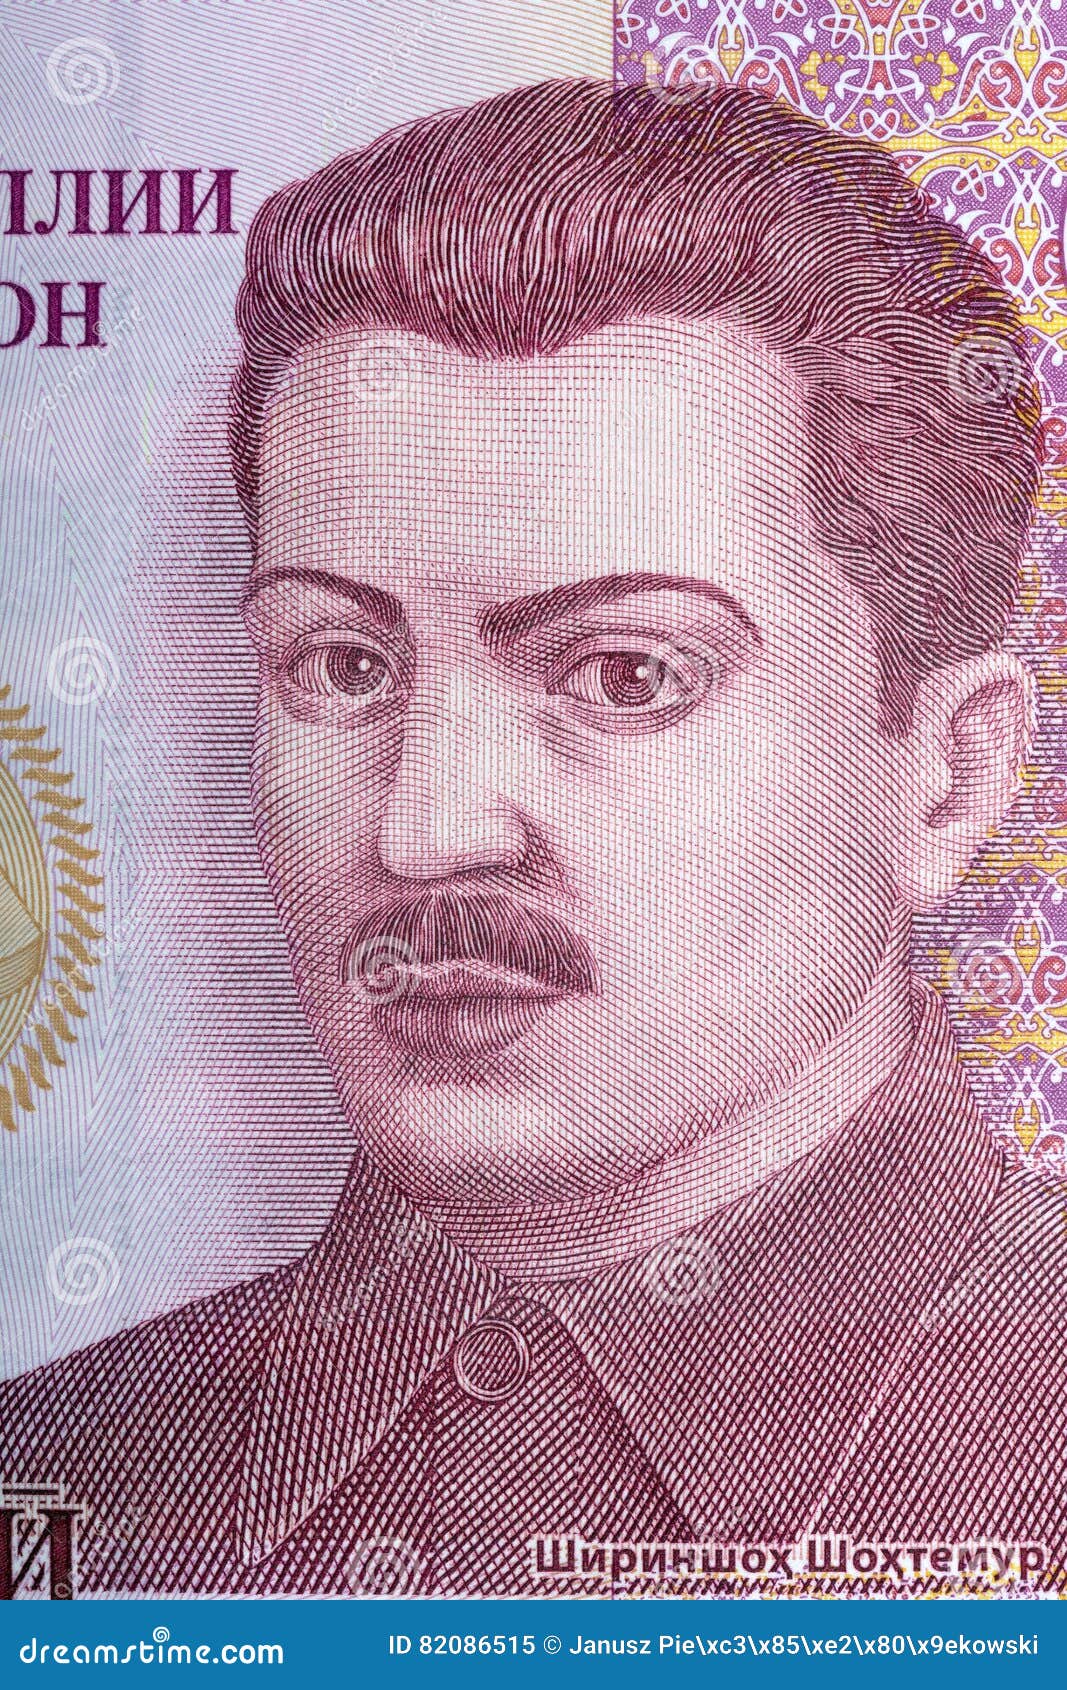 Shirinsho Shotemur Portrait from Tajikistan Money Stock Image - Image ...